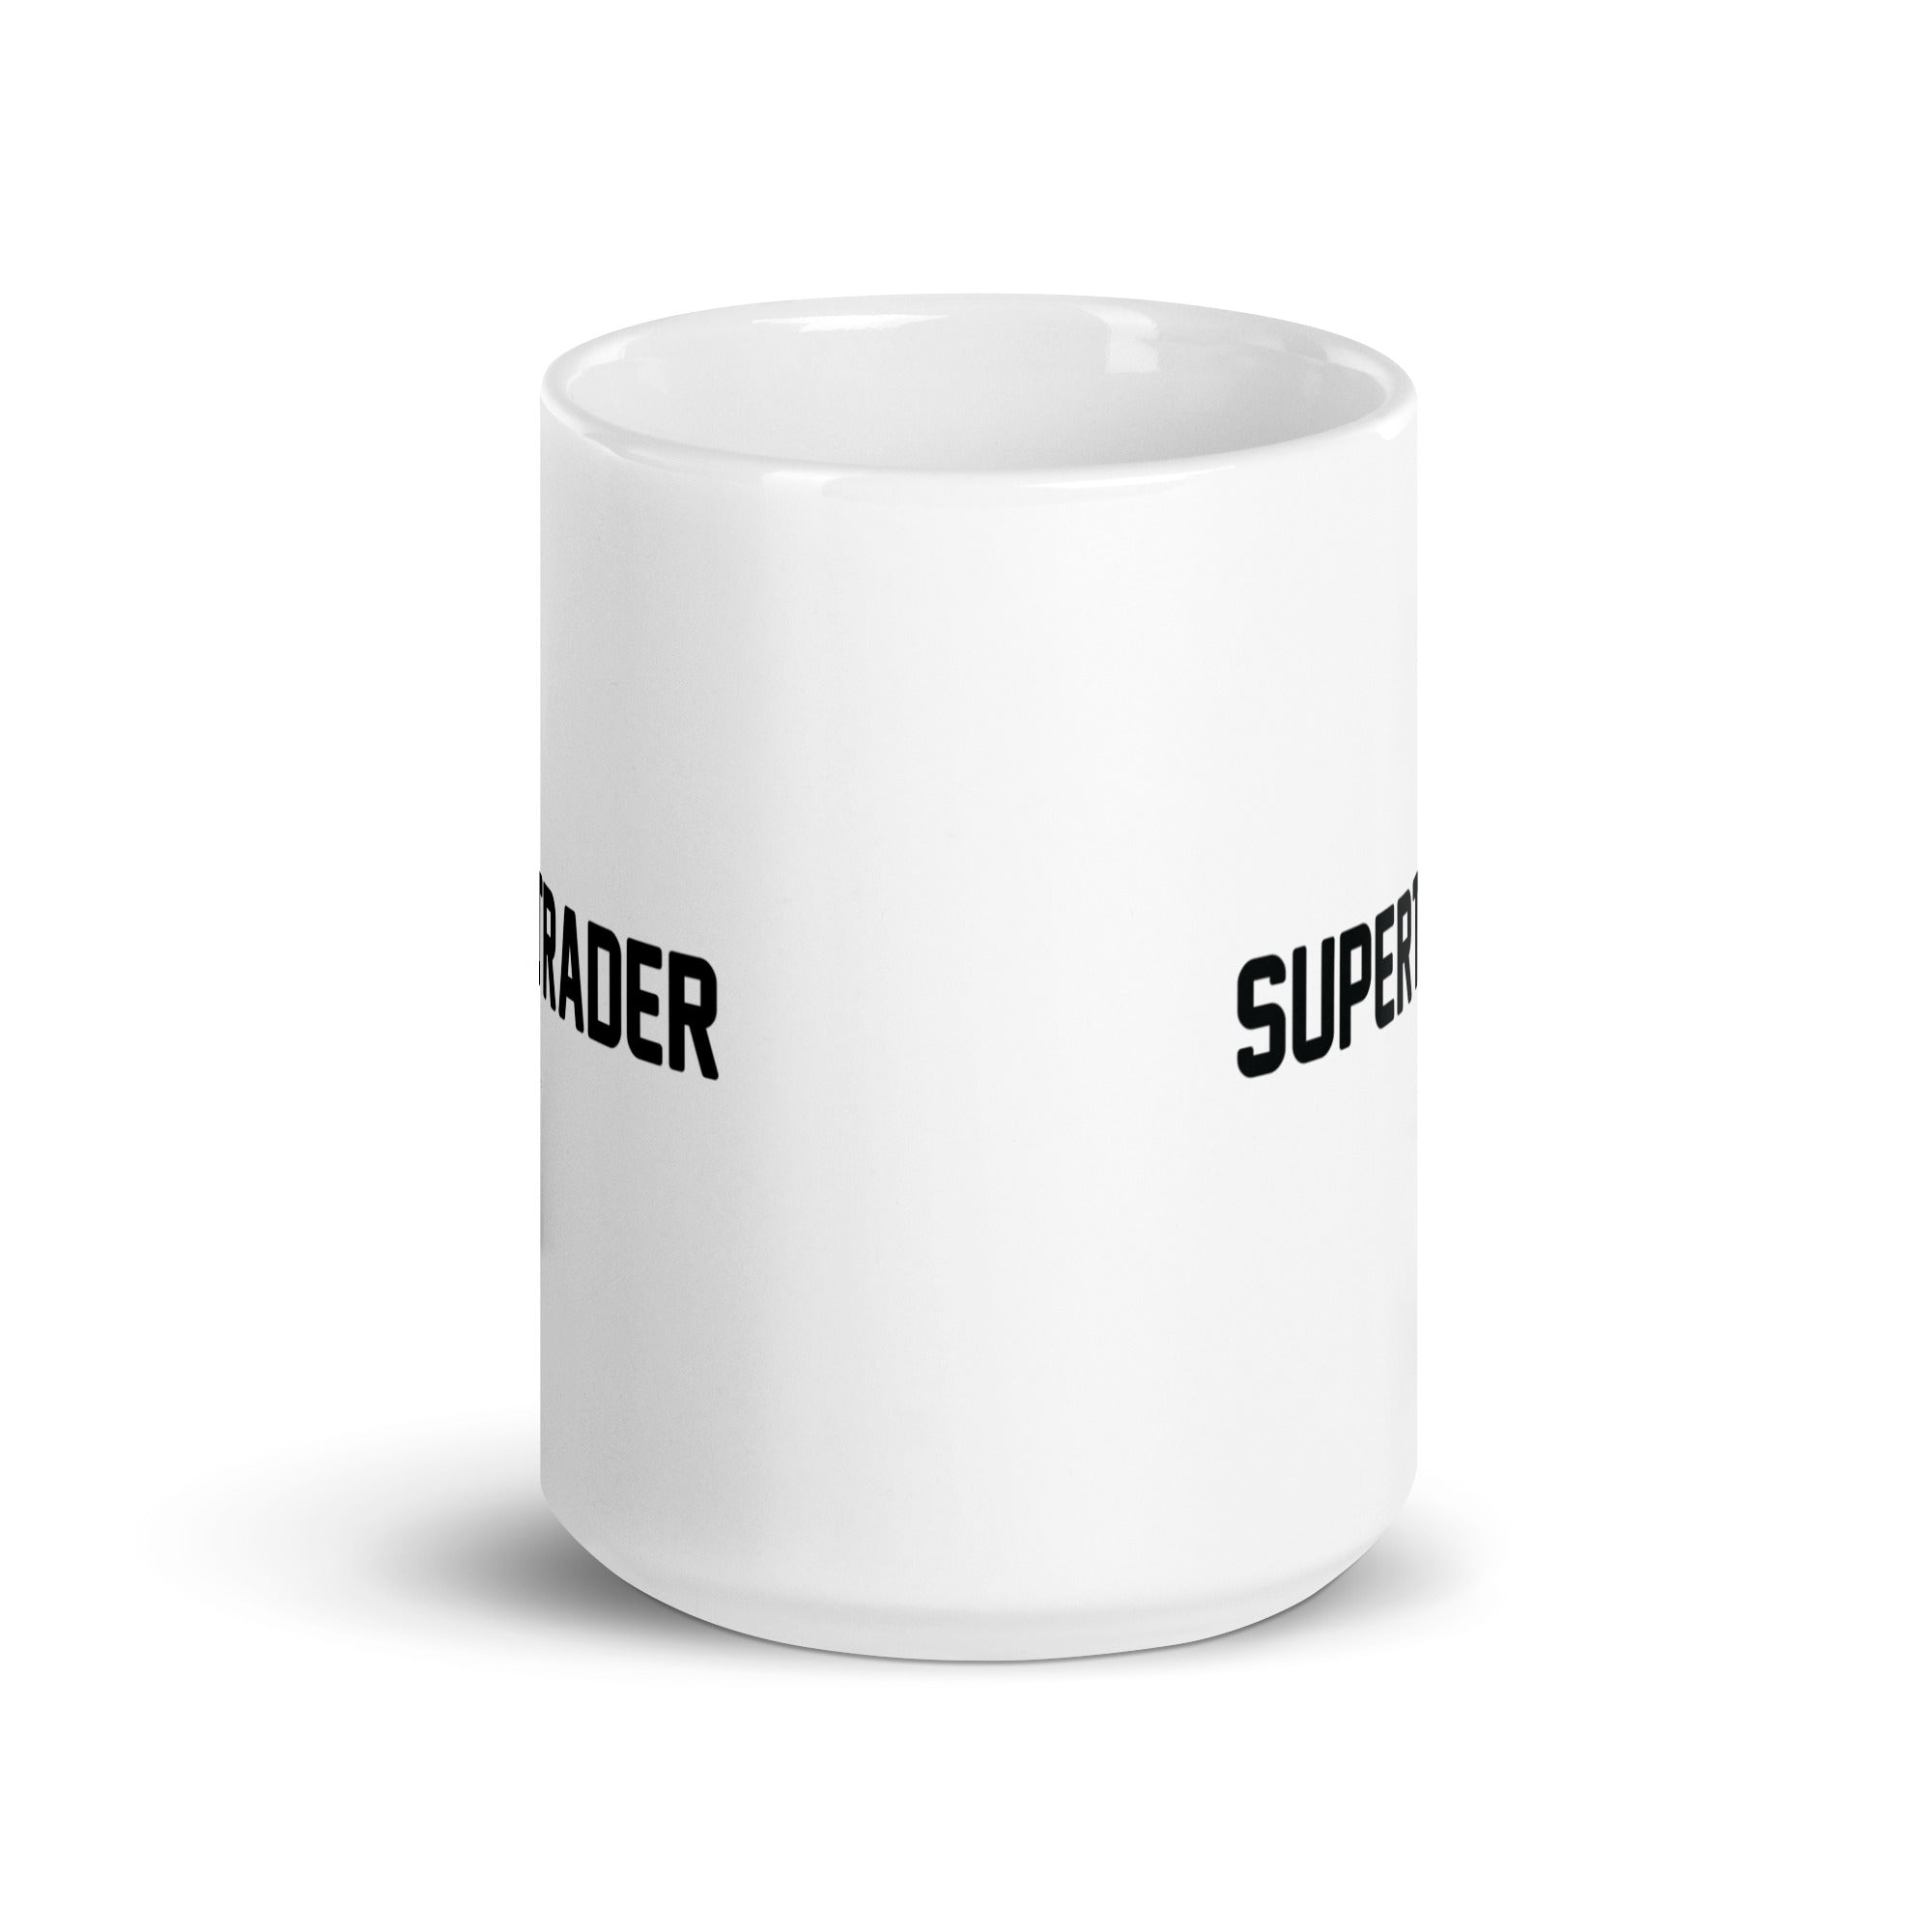 White glossy mug | Supertrader